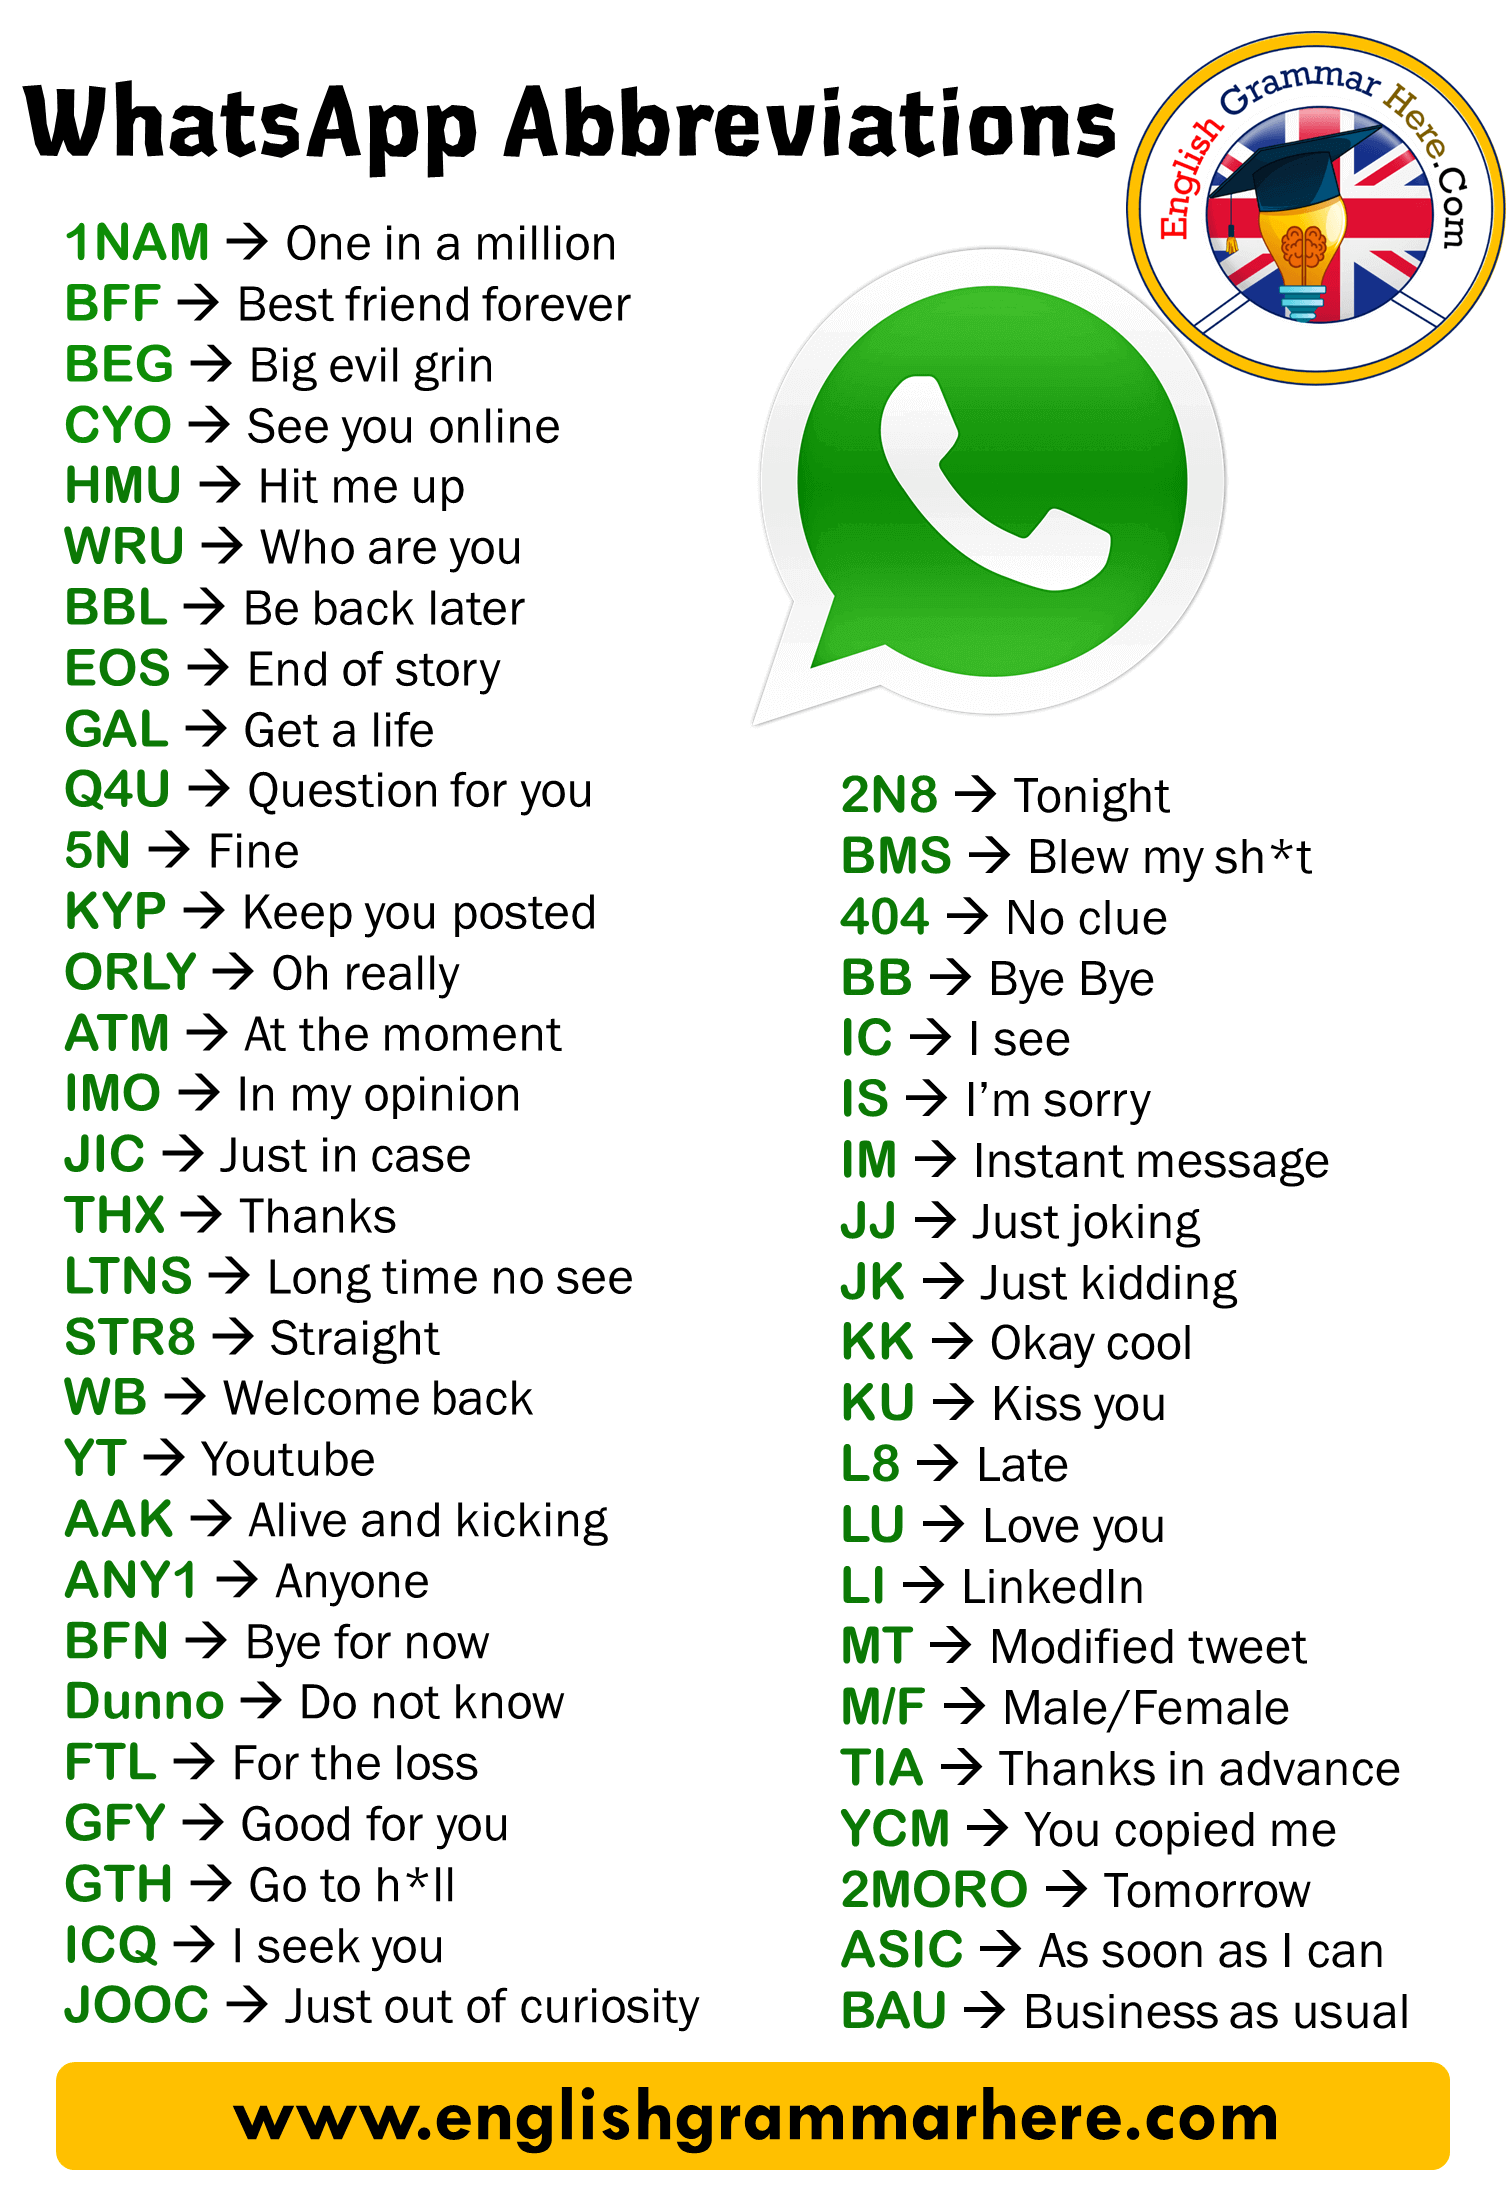 English Most Common WhatsApp Abbreviations List